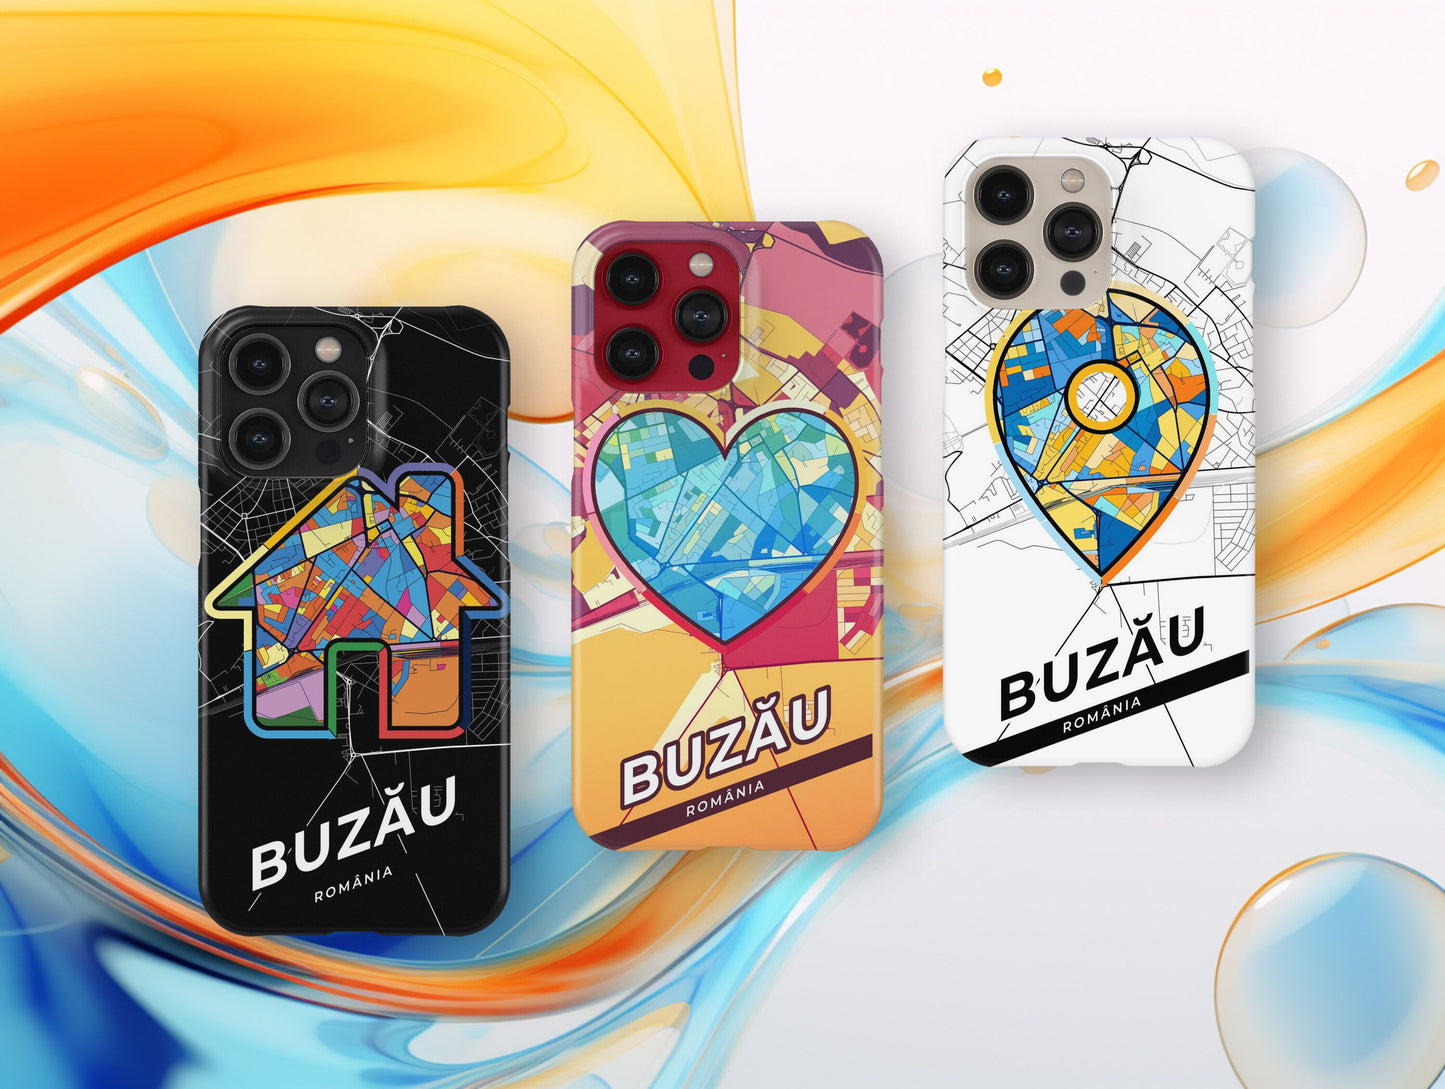 Buzău Romania slim phone case with colorful icon. Birthday, wedding or housewarming gift. Couple match cases.